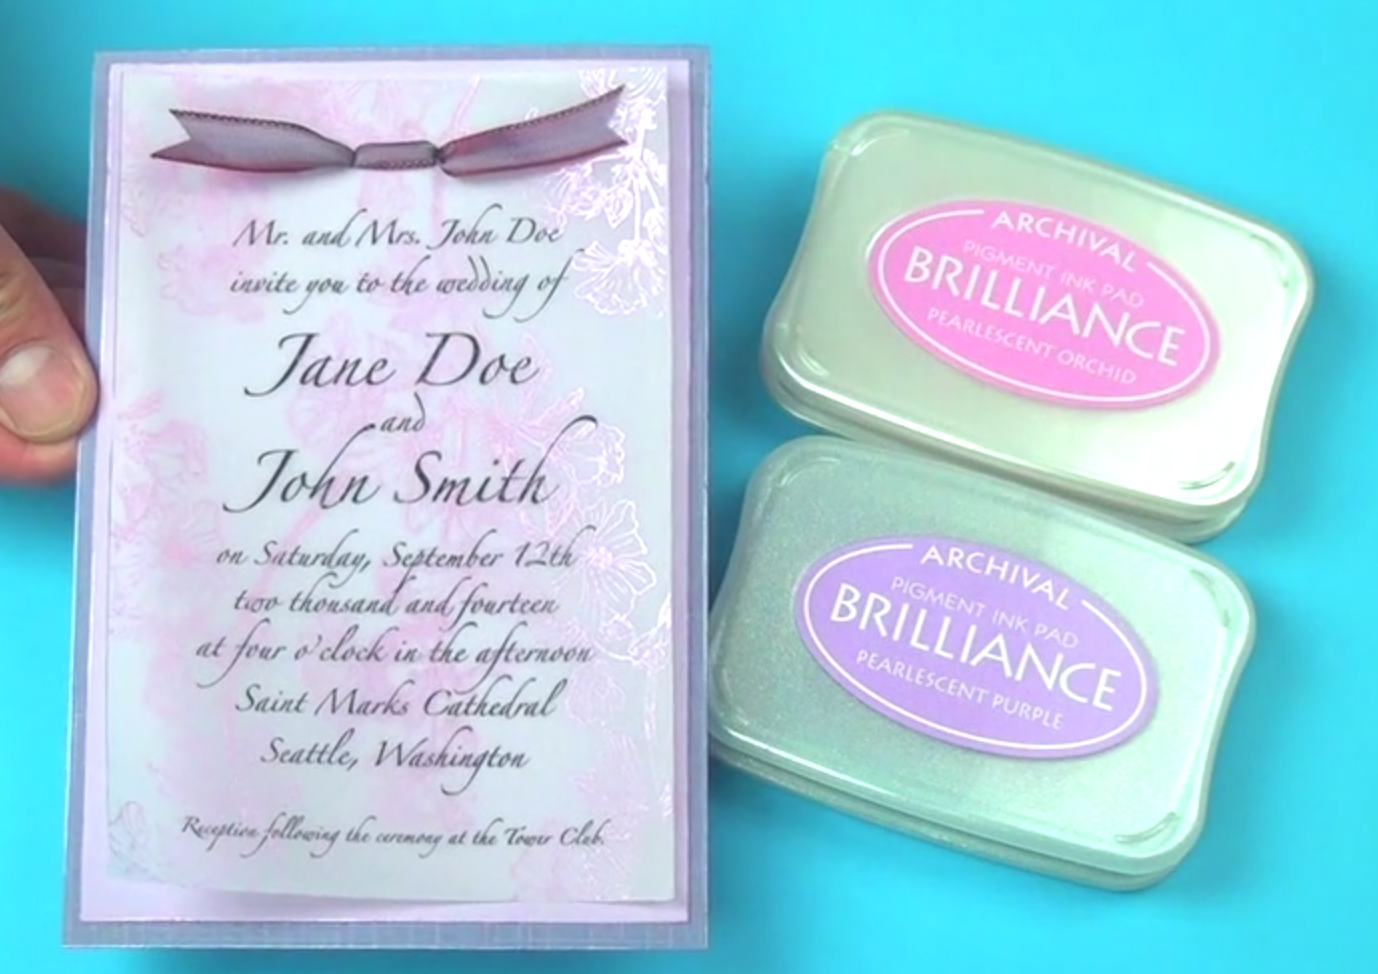 A pink and purple wedding invitation handmade using Brilliance pearlescent pigment inks on vellum.